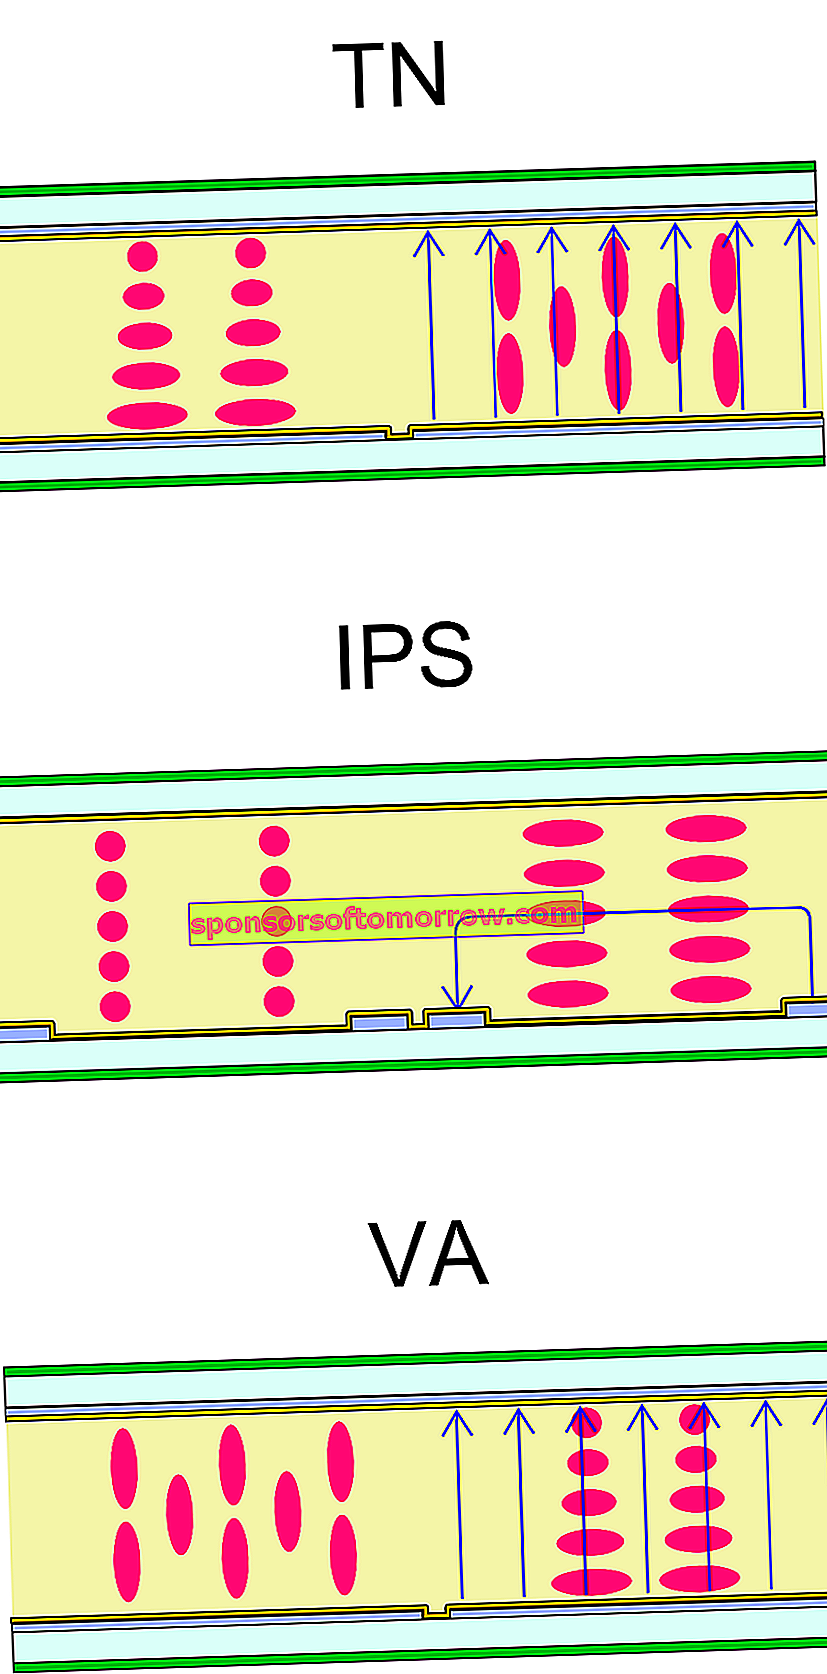 Monitore mit IPS-, AV-, TN- oder OLED-Technologie